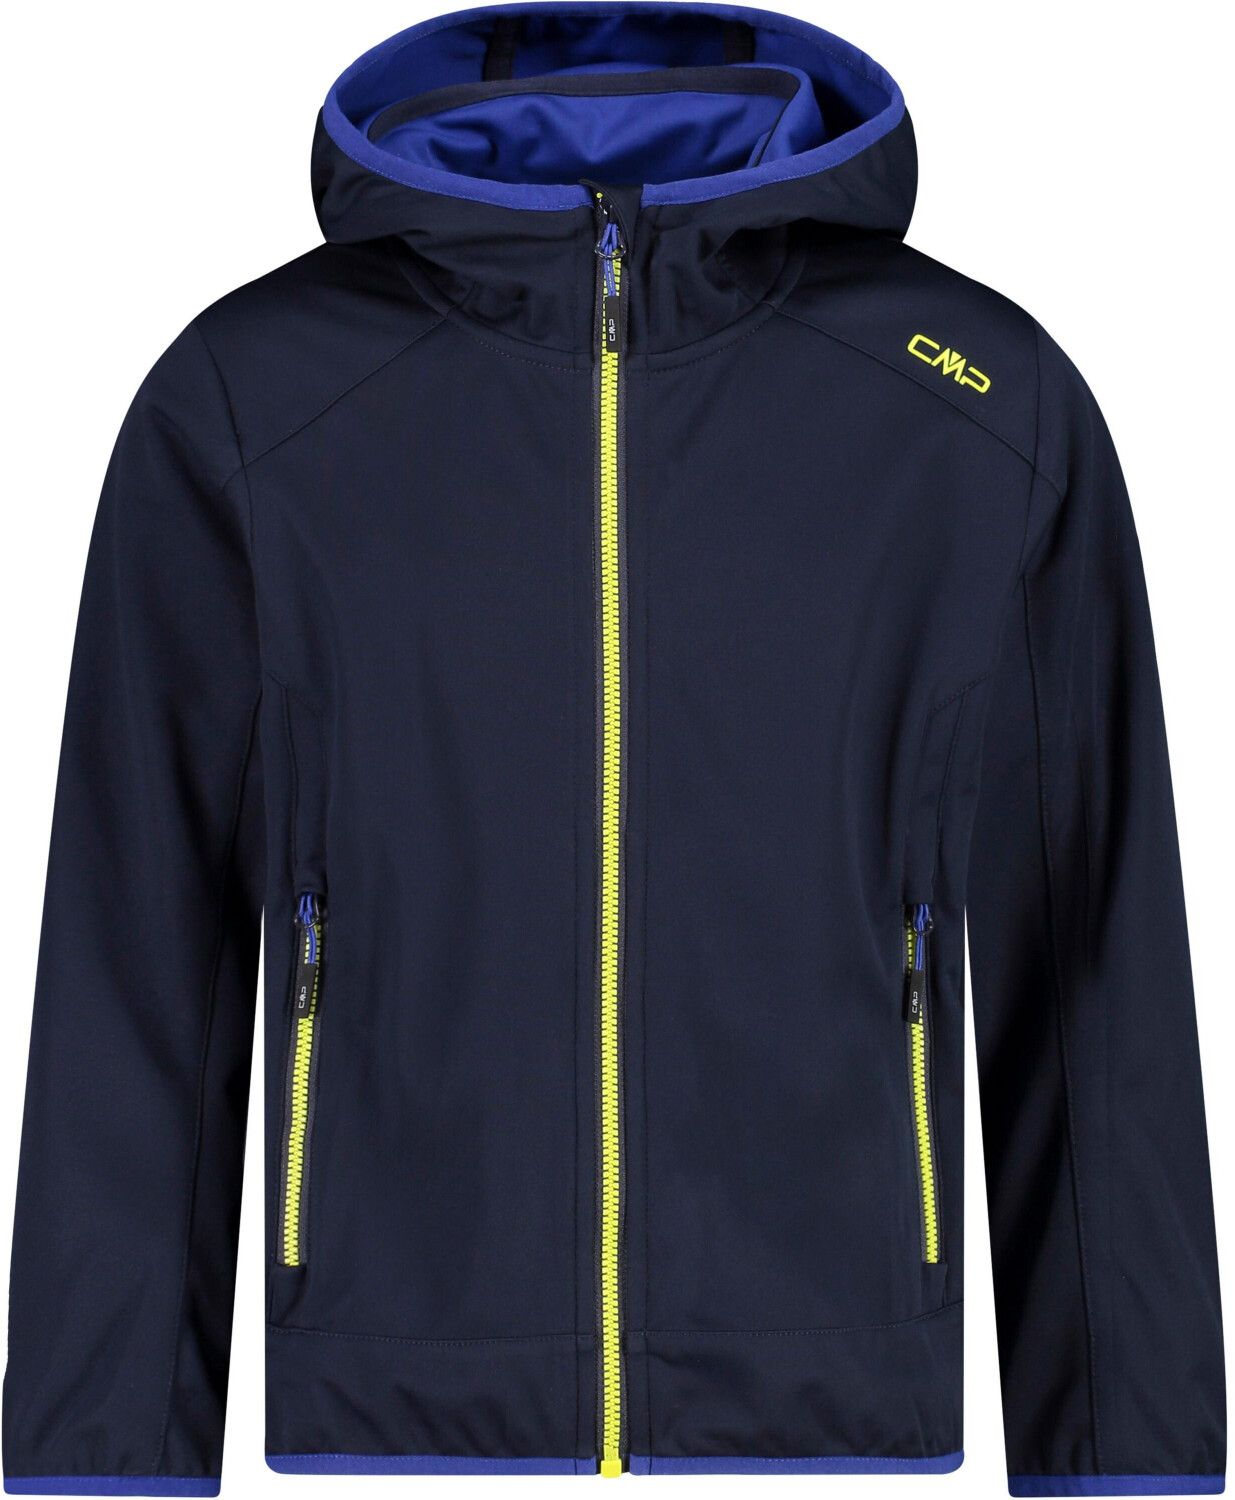 CMP | Preisvergleich bei b.blue/bluish 26,99 Boys ab (39A5134) Jacket Softshell €